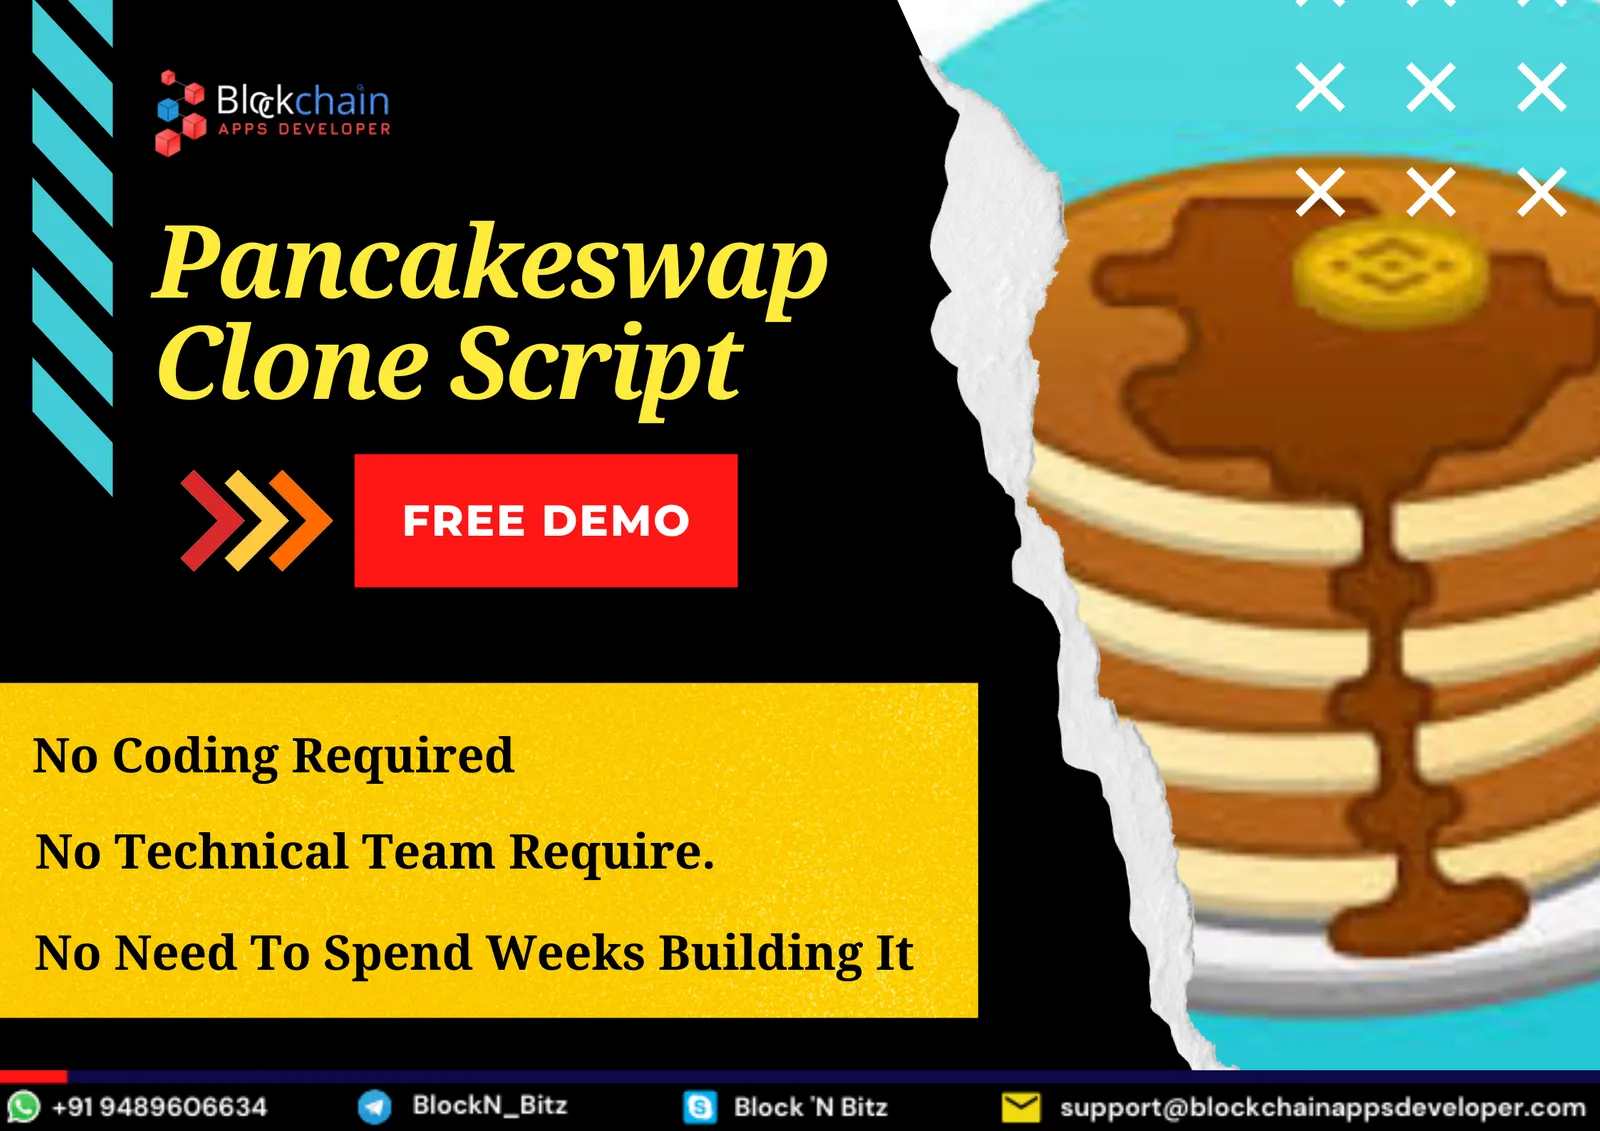 How to Make Money With BlockchainAppsDeveloper's PancakeSwap Clone Script